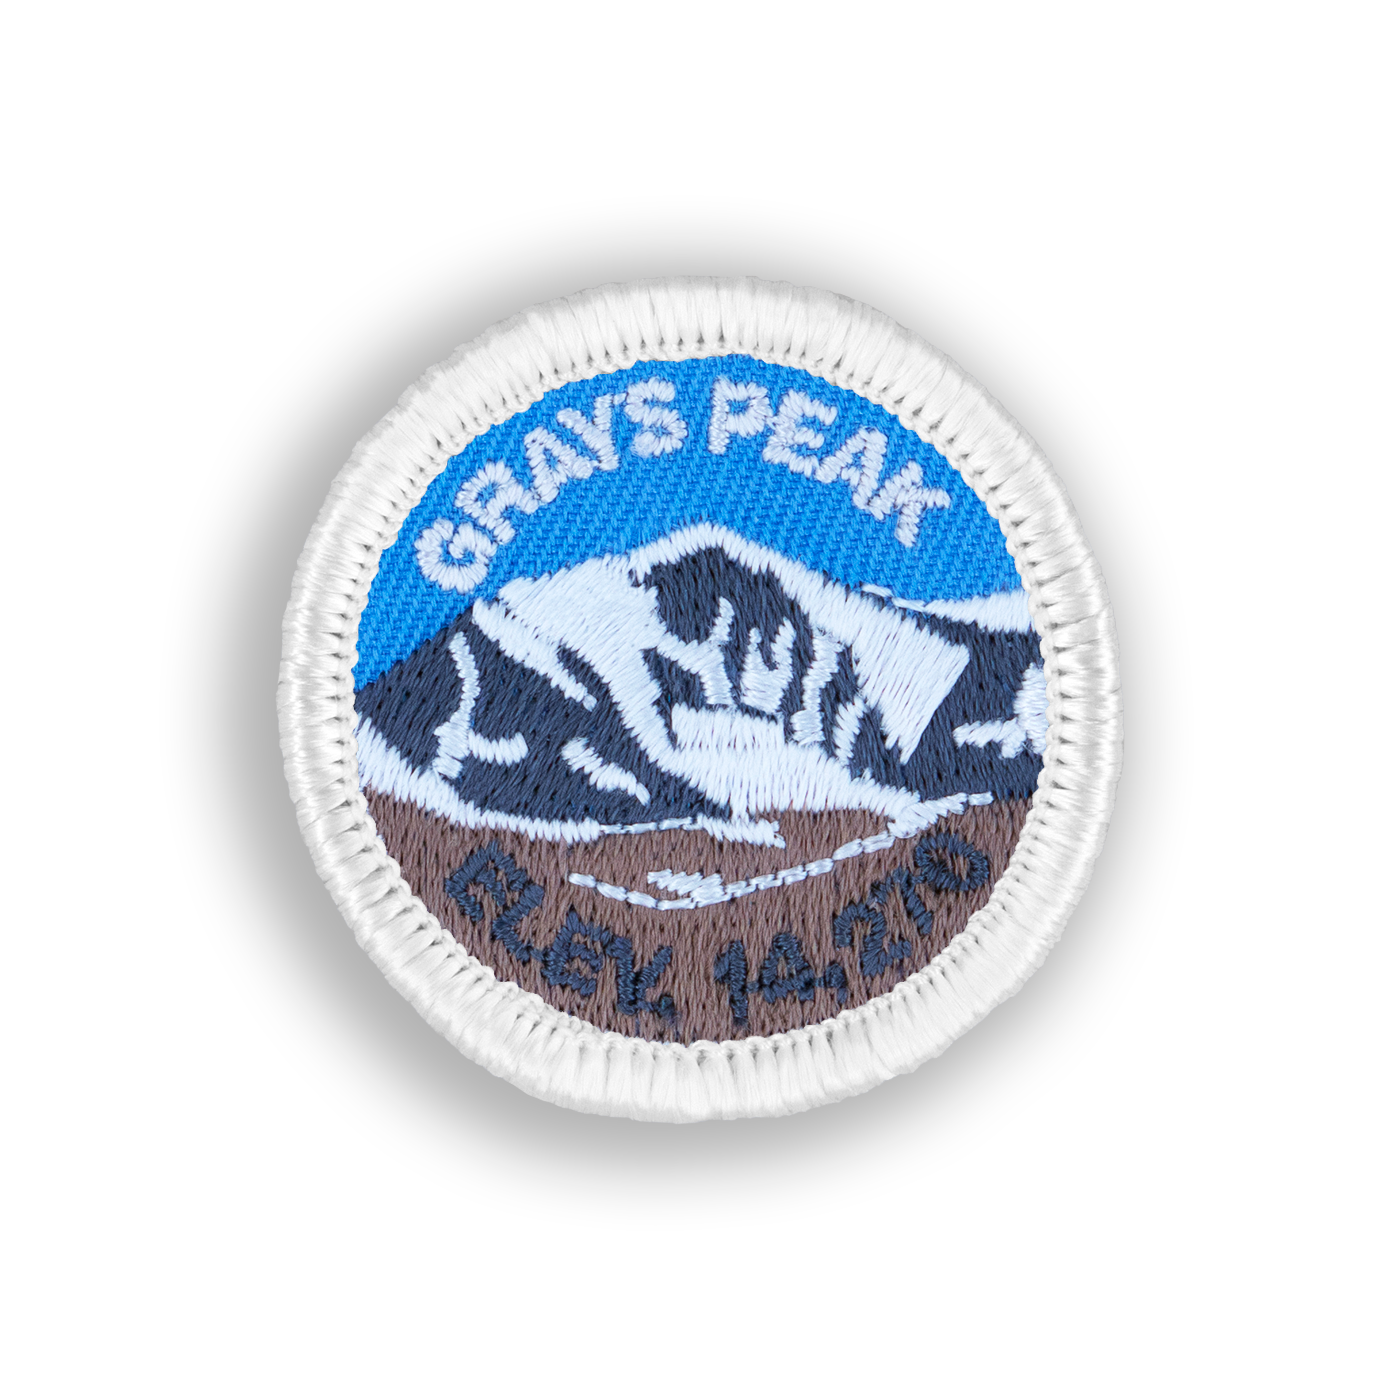 Grays Peak Patch | Demerit Wear - Fake Merit Badges